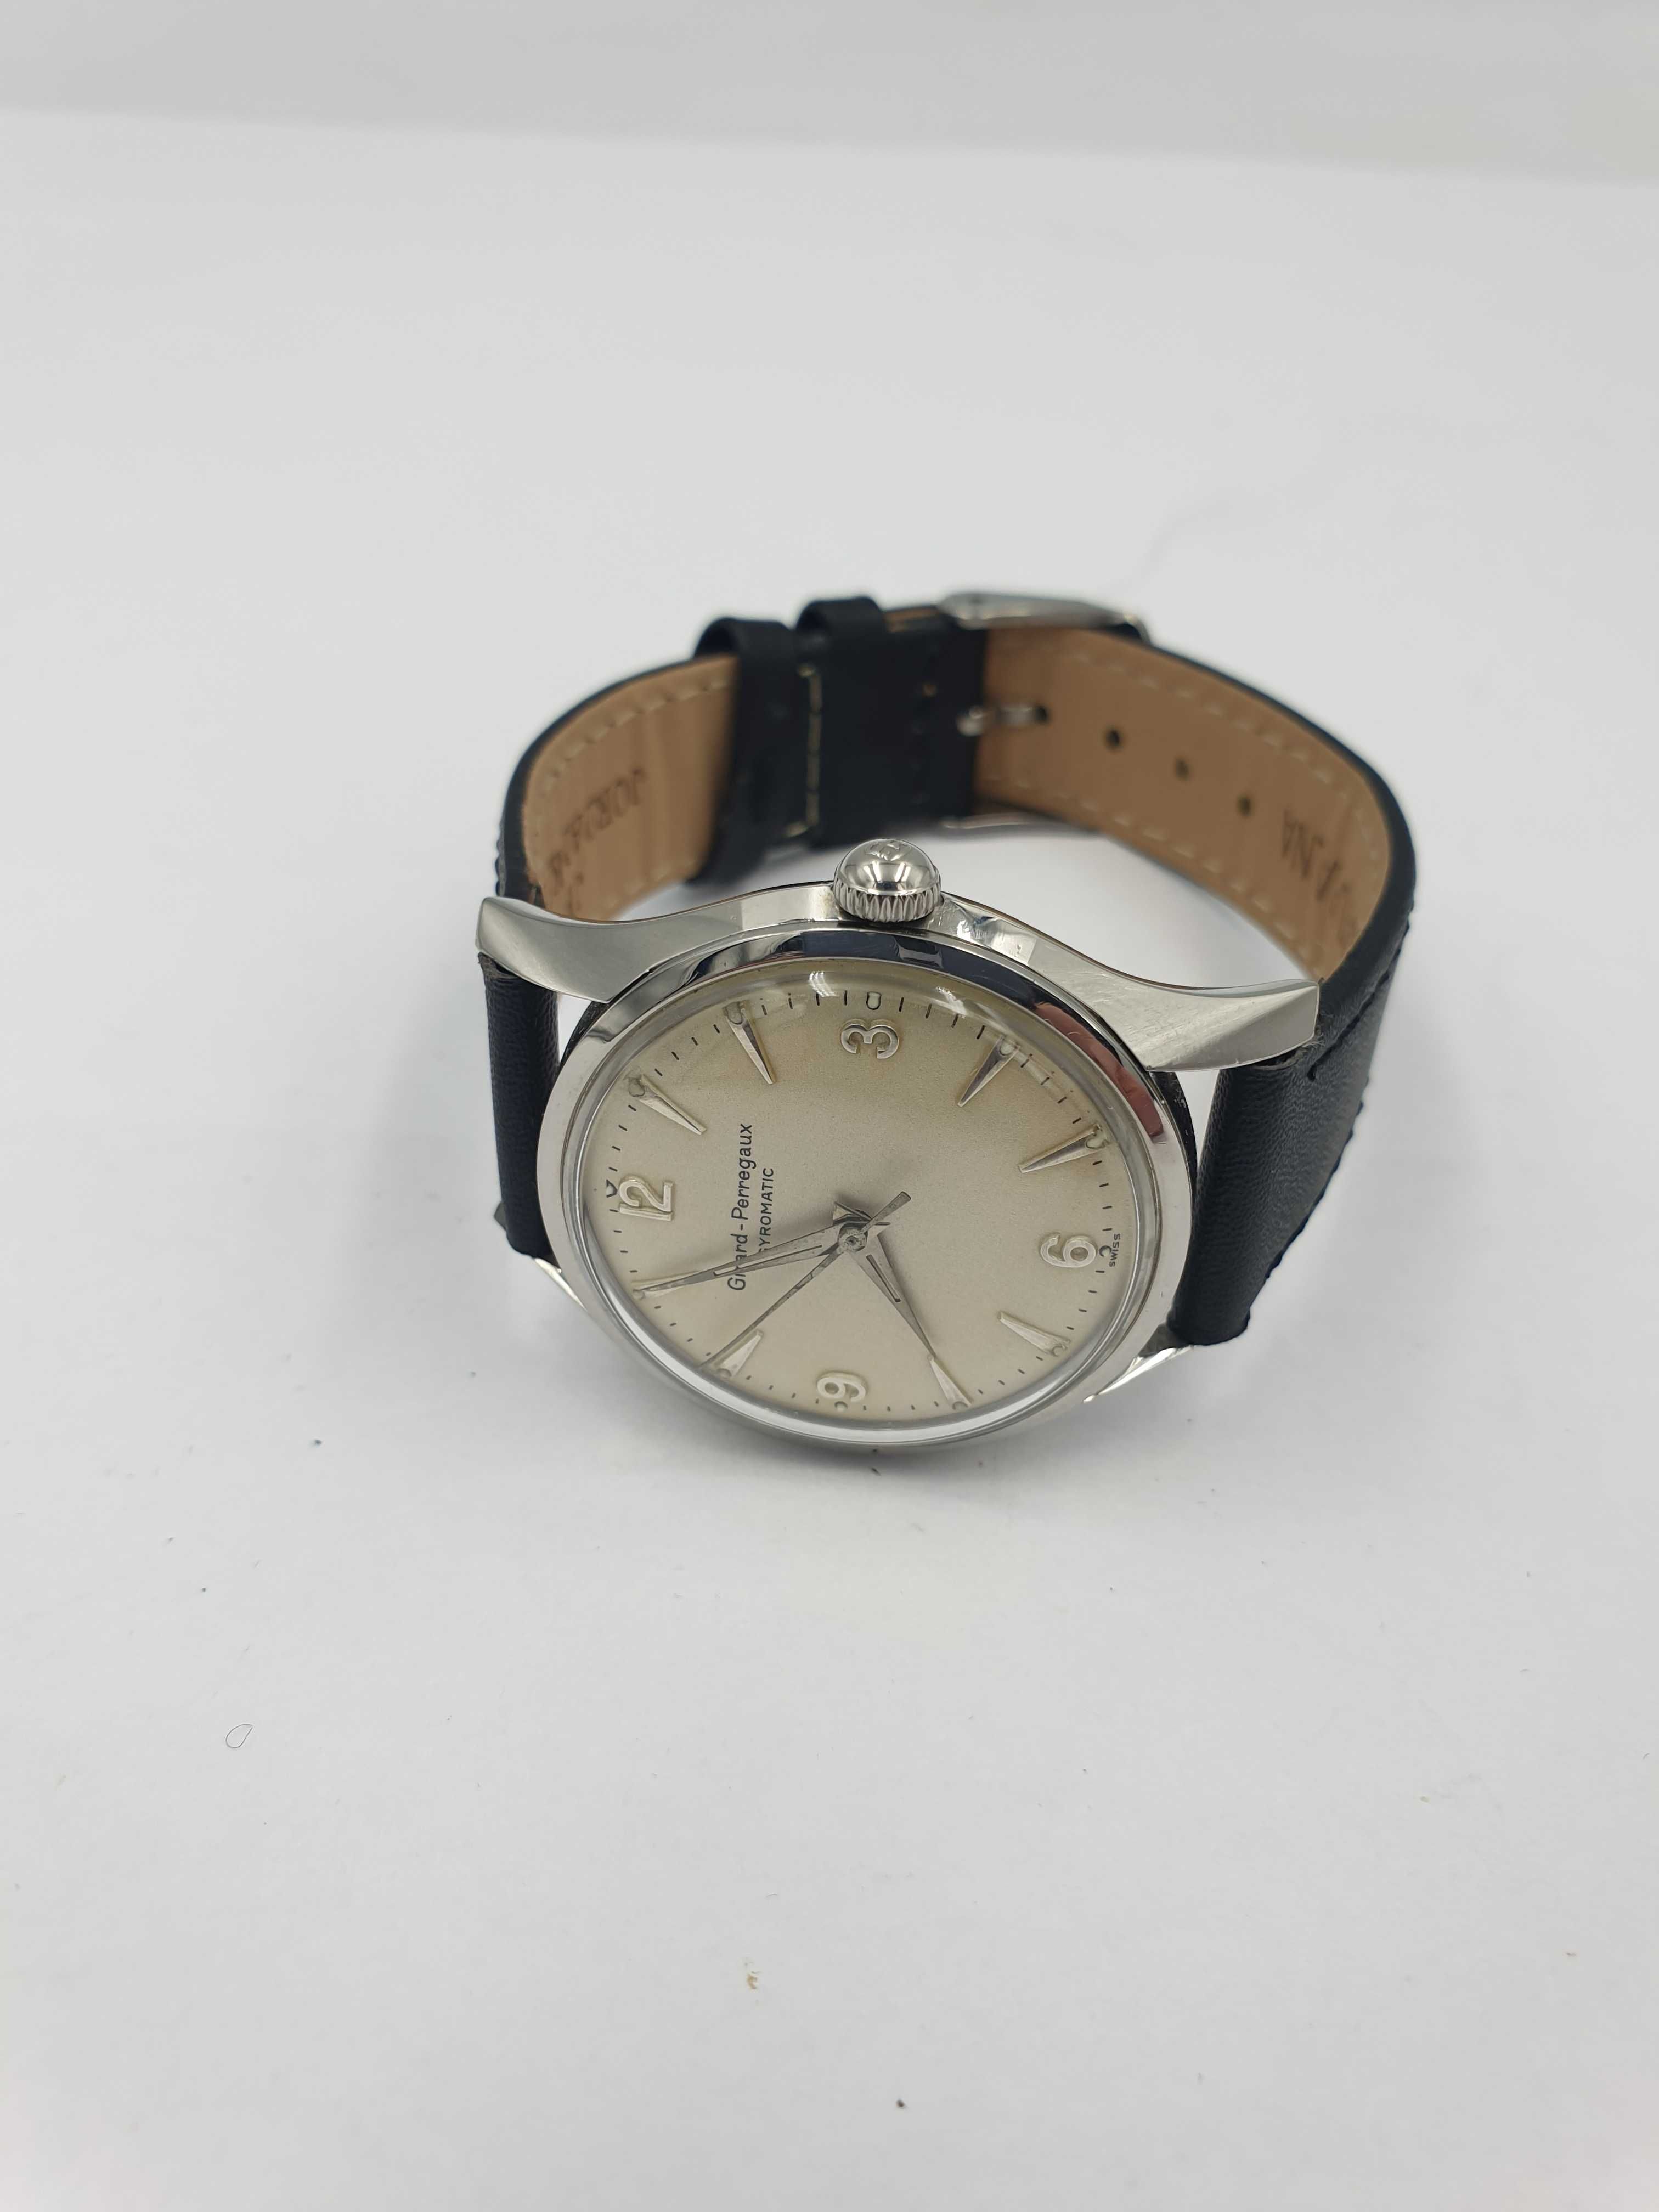 Zegarek Girard Perregaux Gyromatic / Świetny stan / 1960r